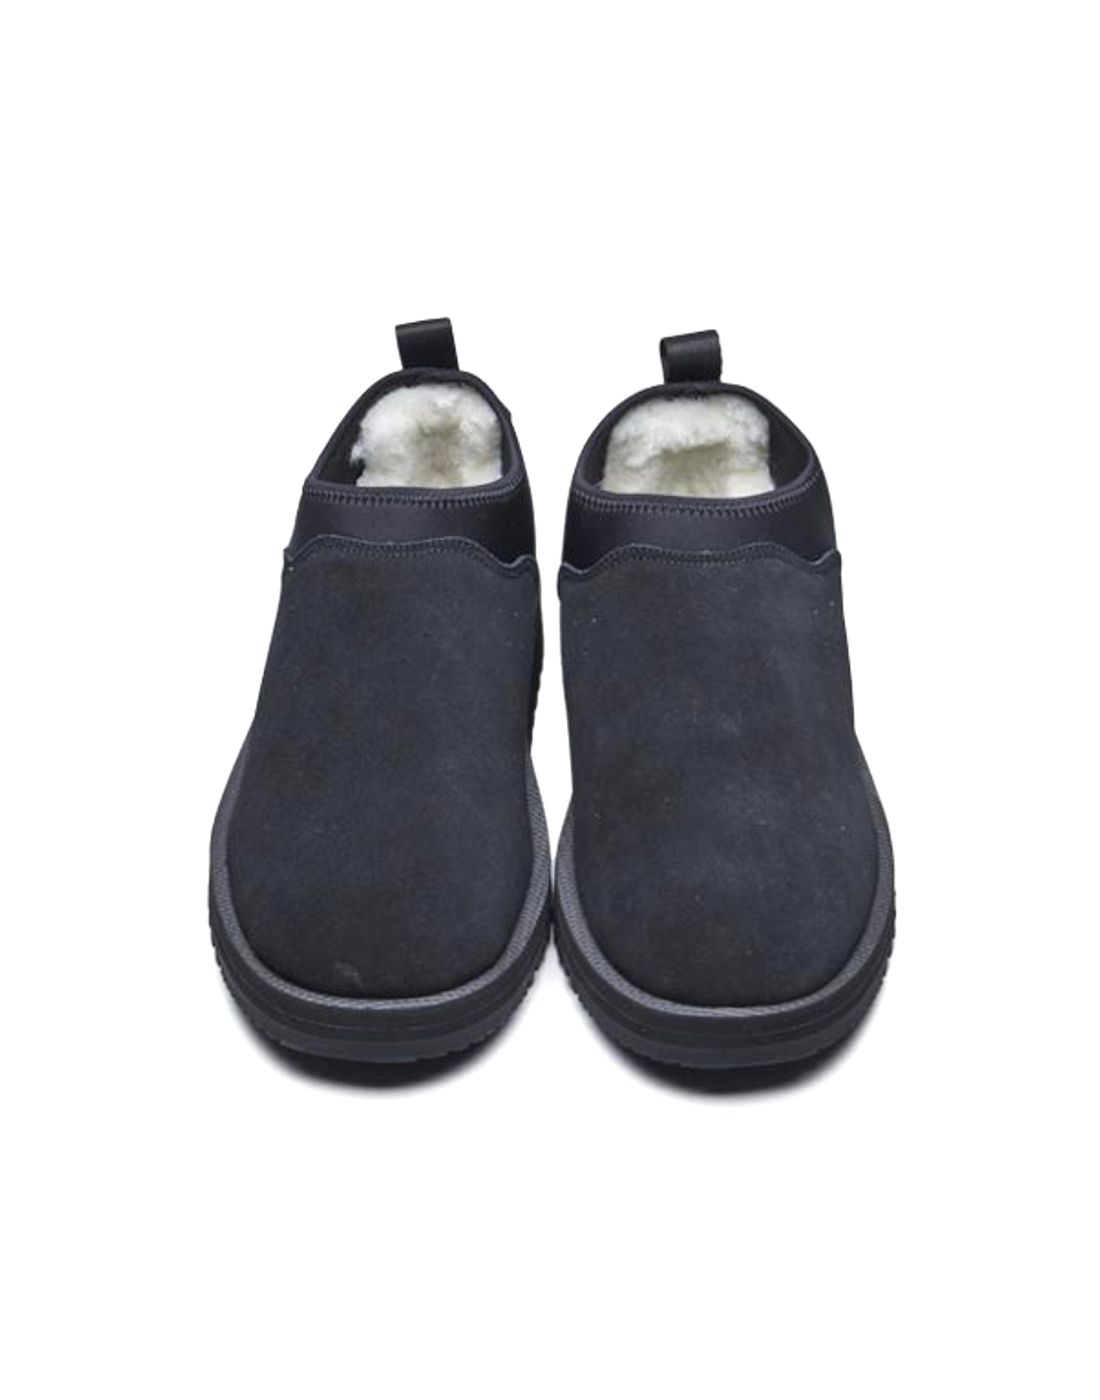 Shoes for woman SUICOKE OG 073 MWPAB BLACK